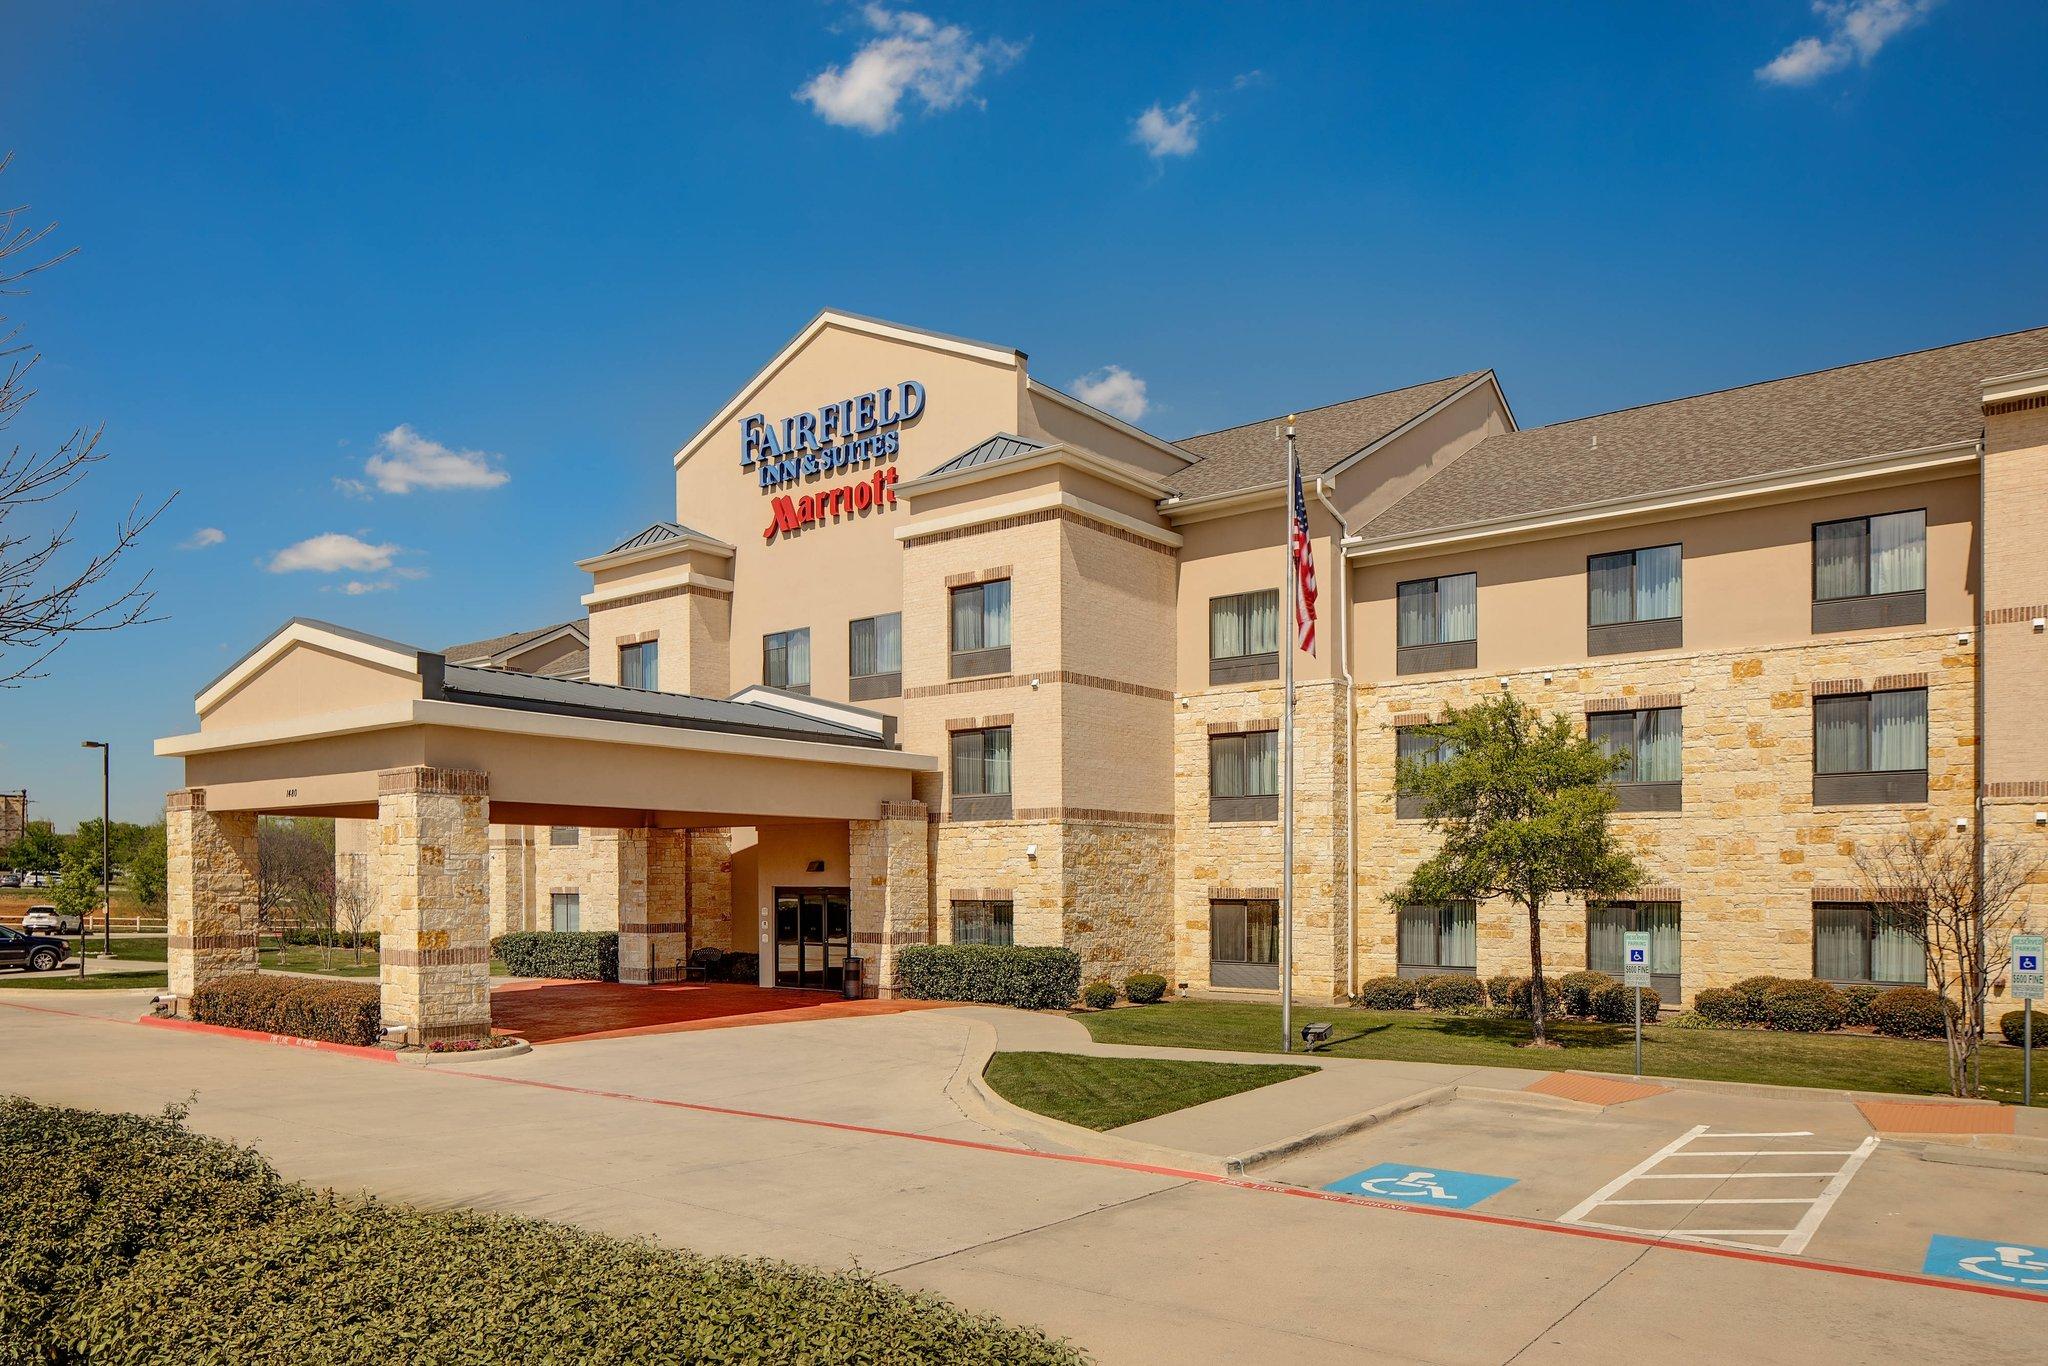 Fairfield Inn & Suites Dallas Mansfield in Mansfield, TX